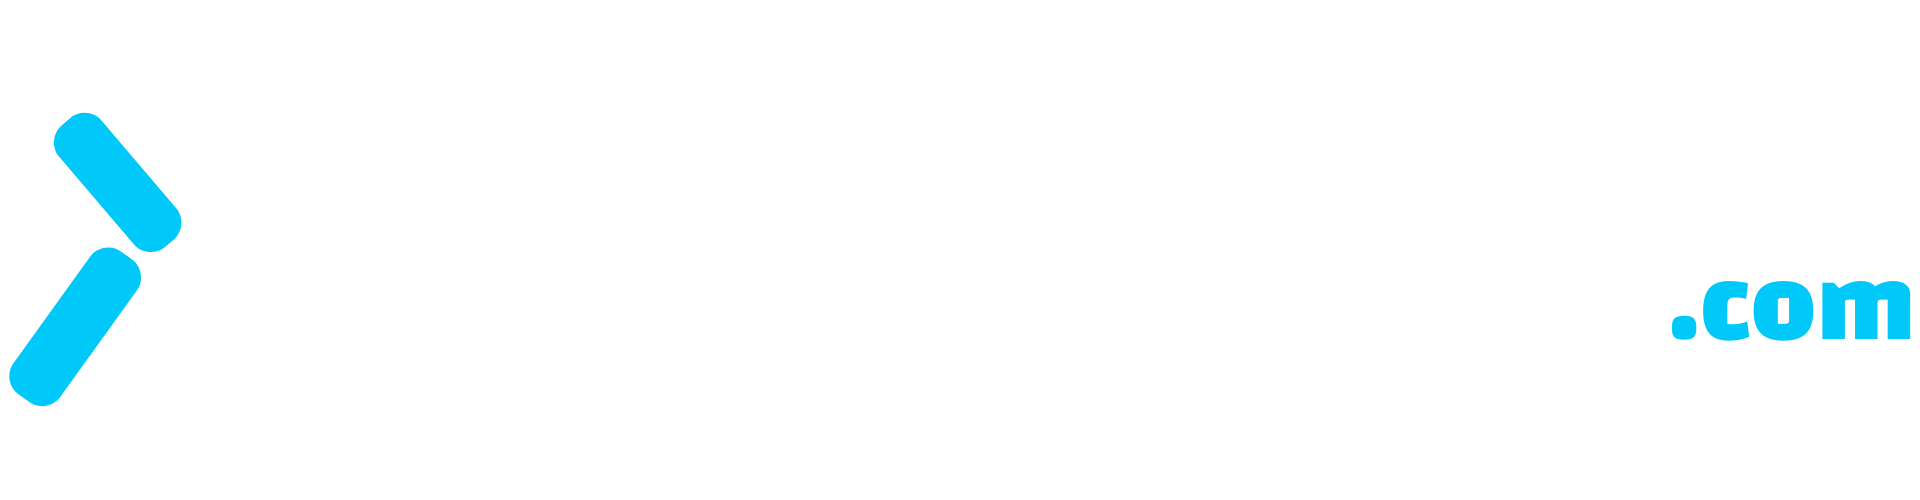 Travel New Zealand Logo